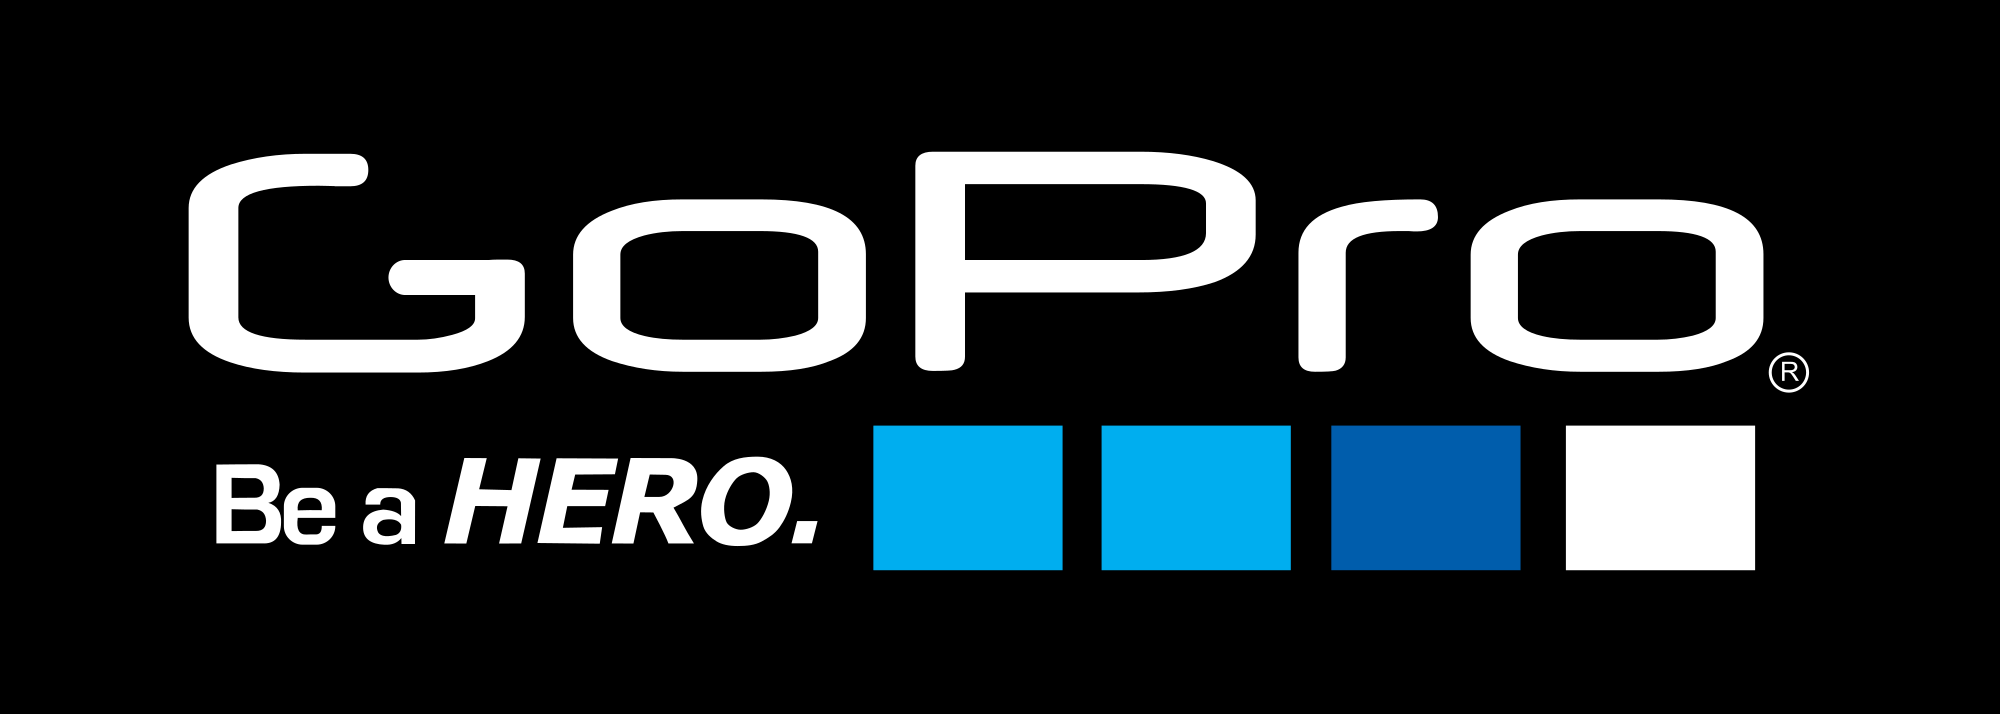 GoPro Logo - File:GoPro logo.svg - Wikimedia Commons